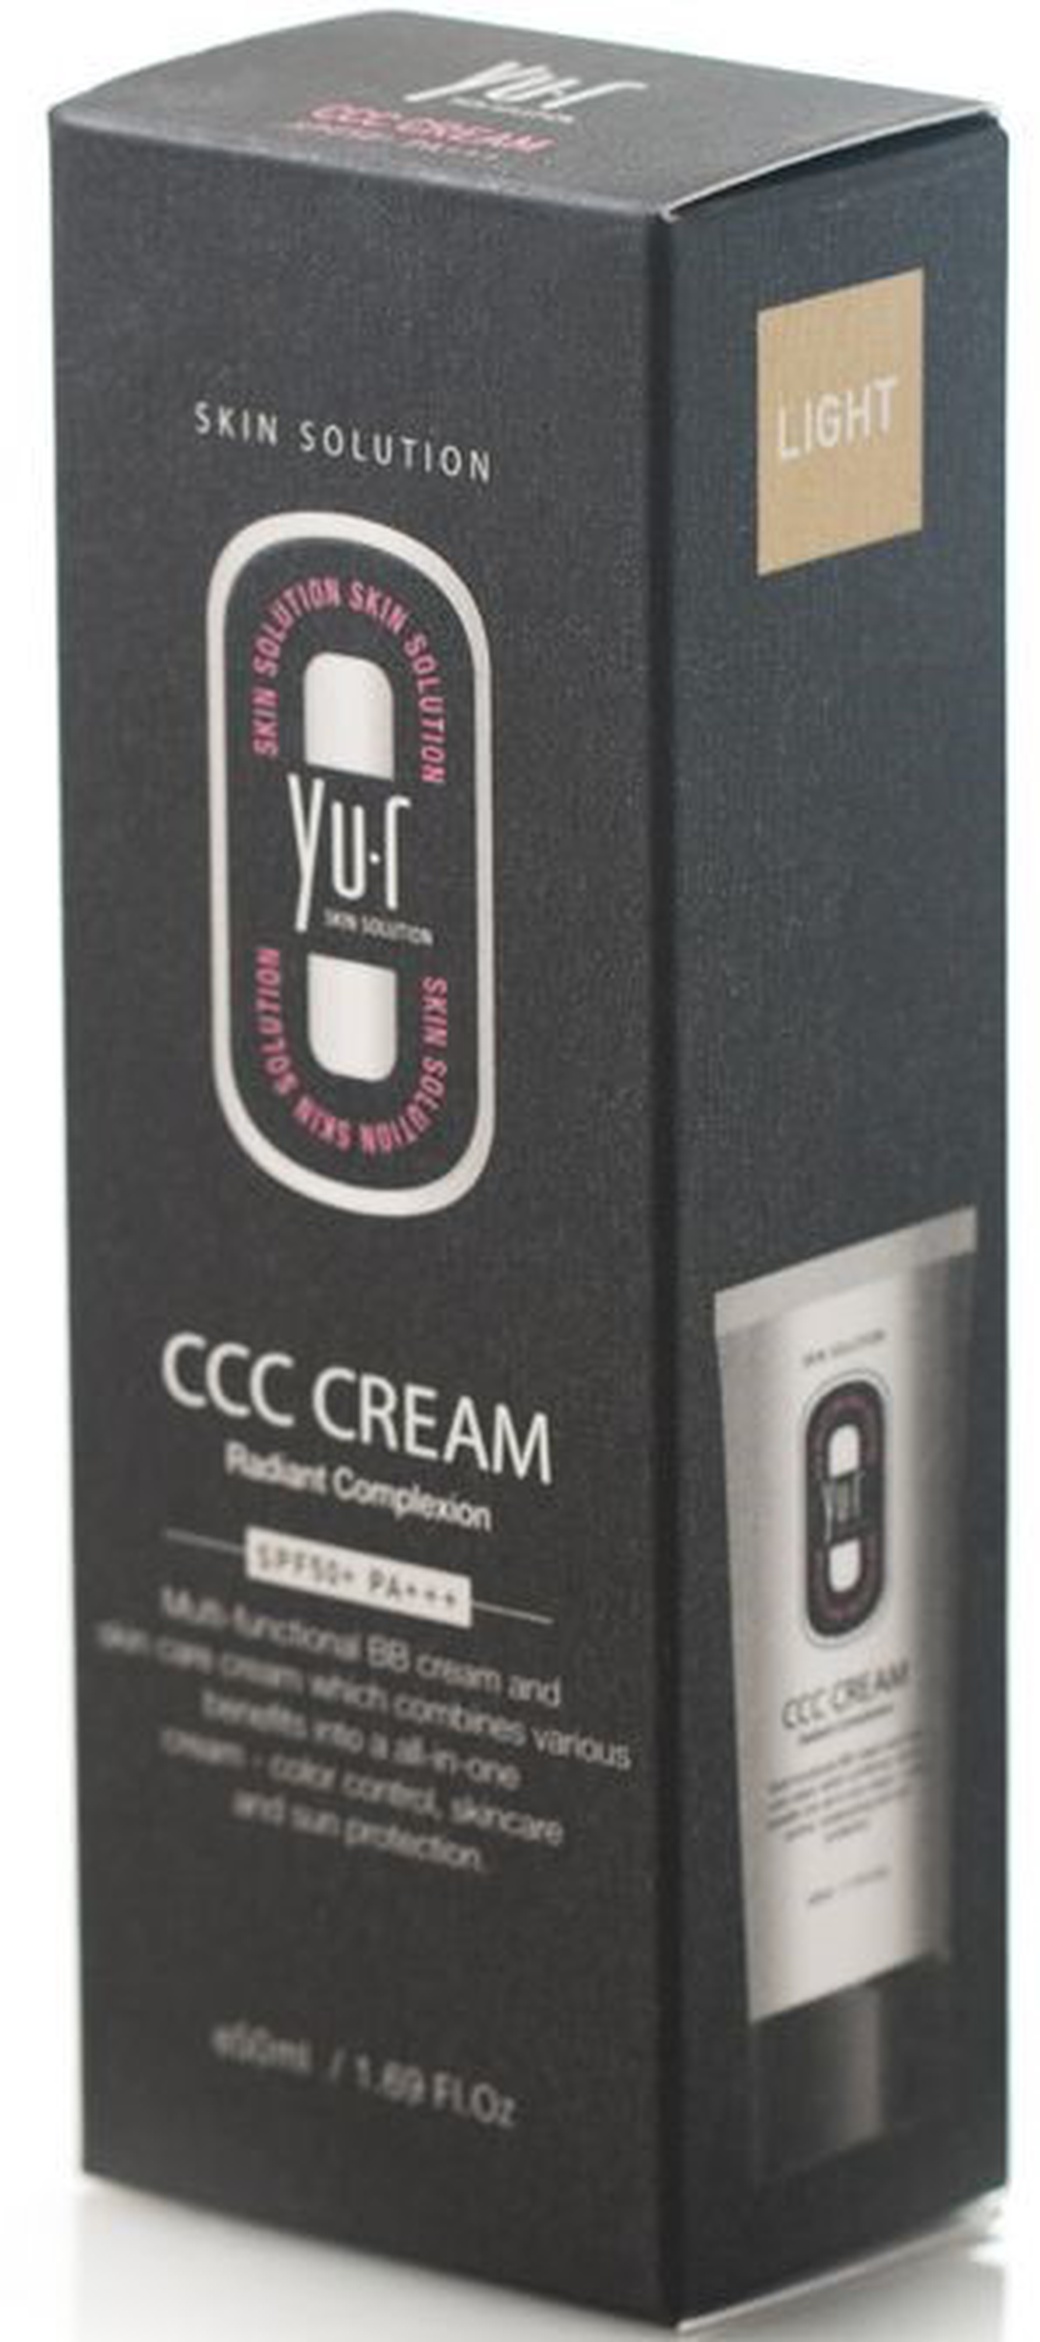 Корректирующий крем Yu-r CCC Cream (light), 1 шт SPF 50, 50 мл. фото